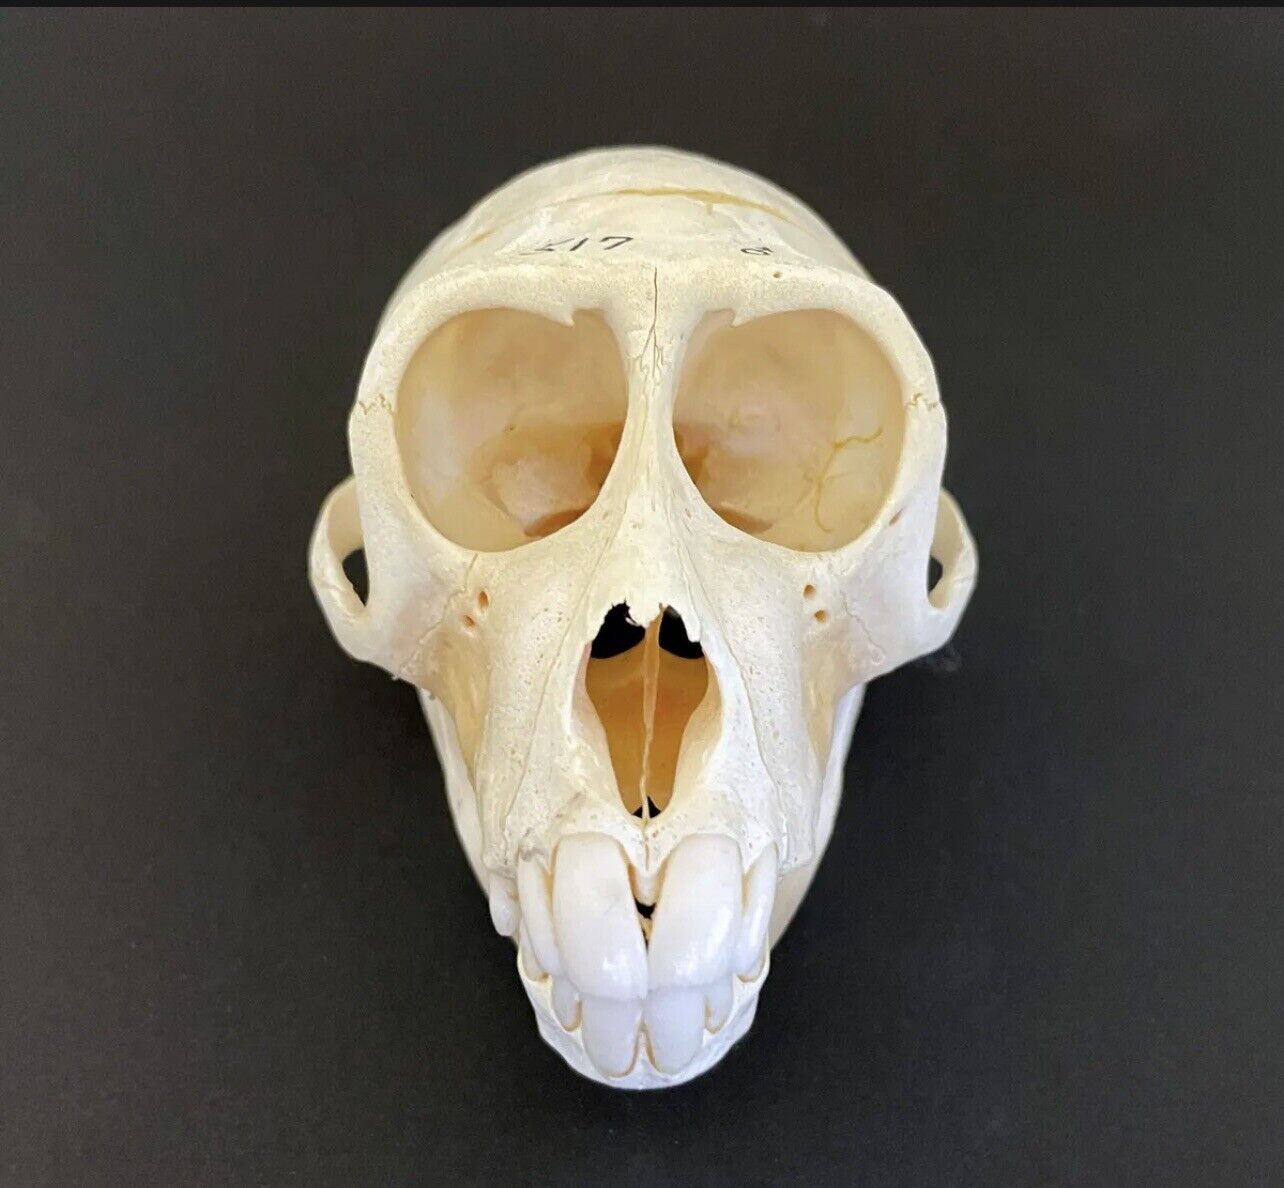 Rhesus macaque monkey skull